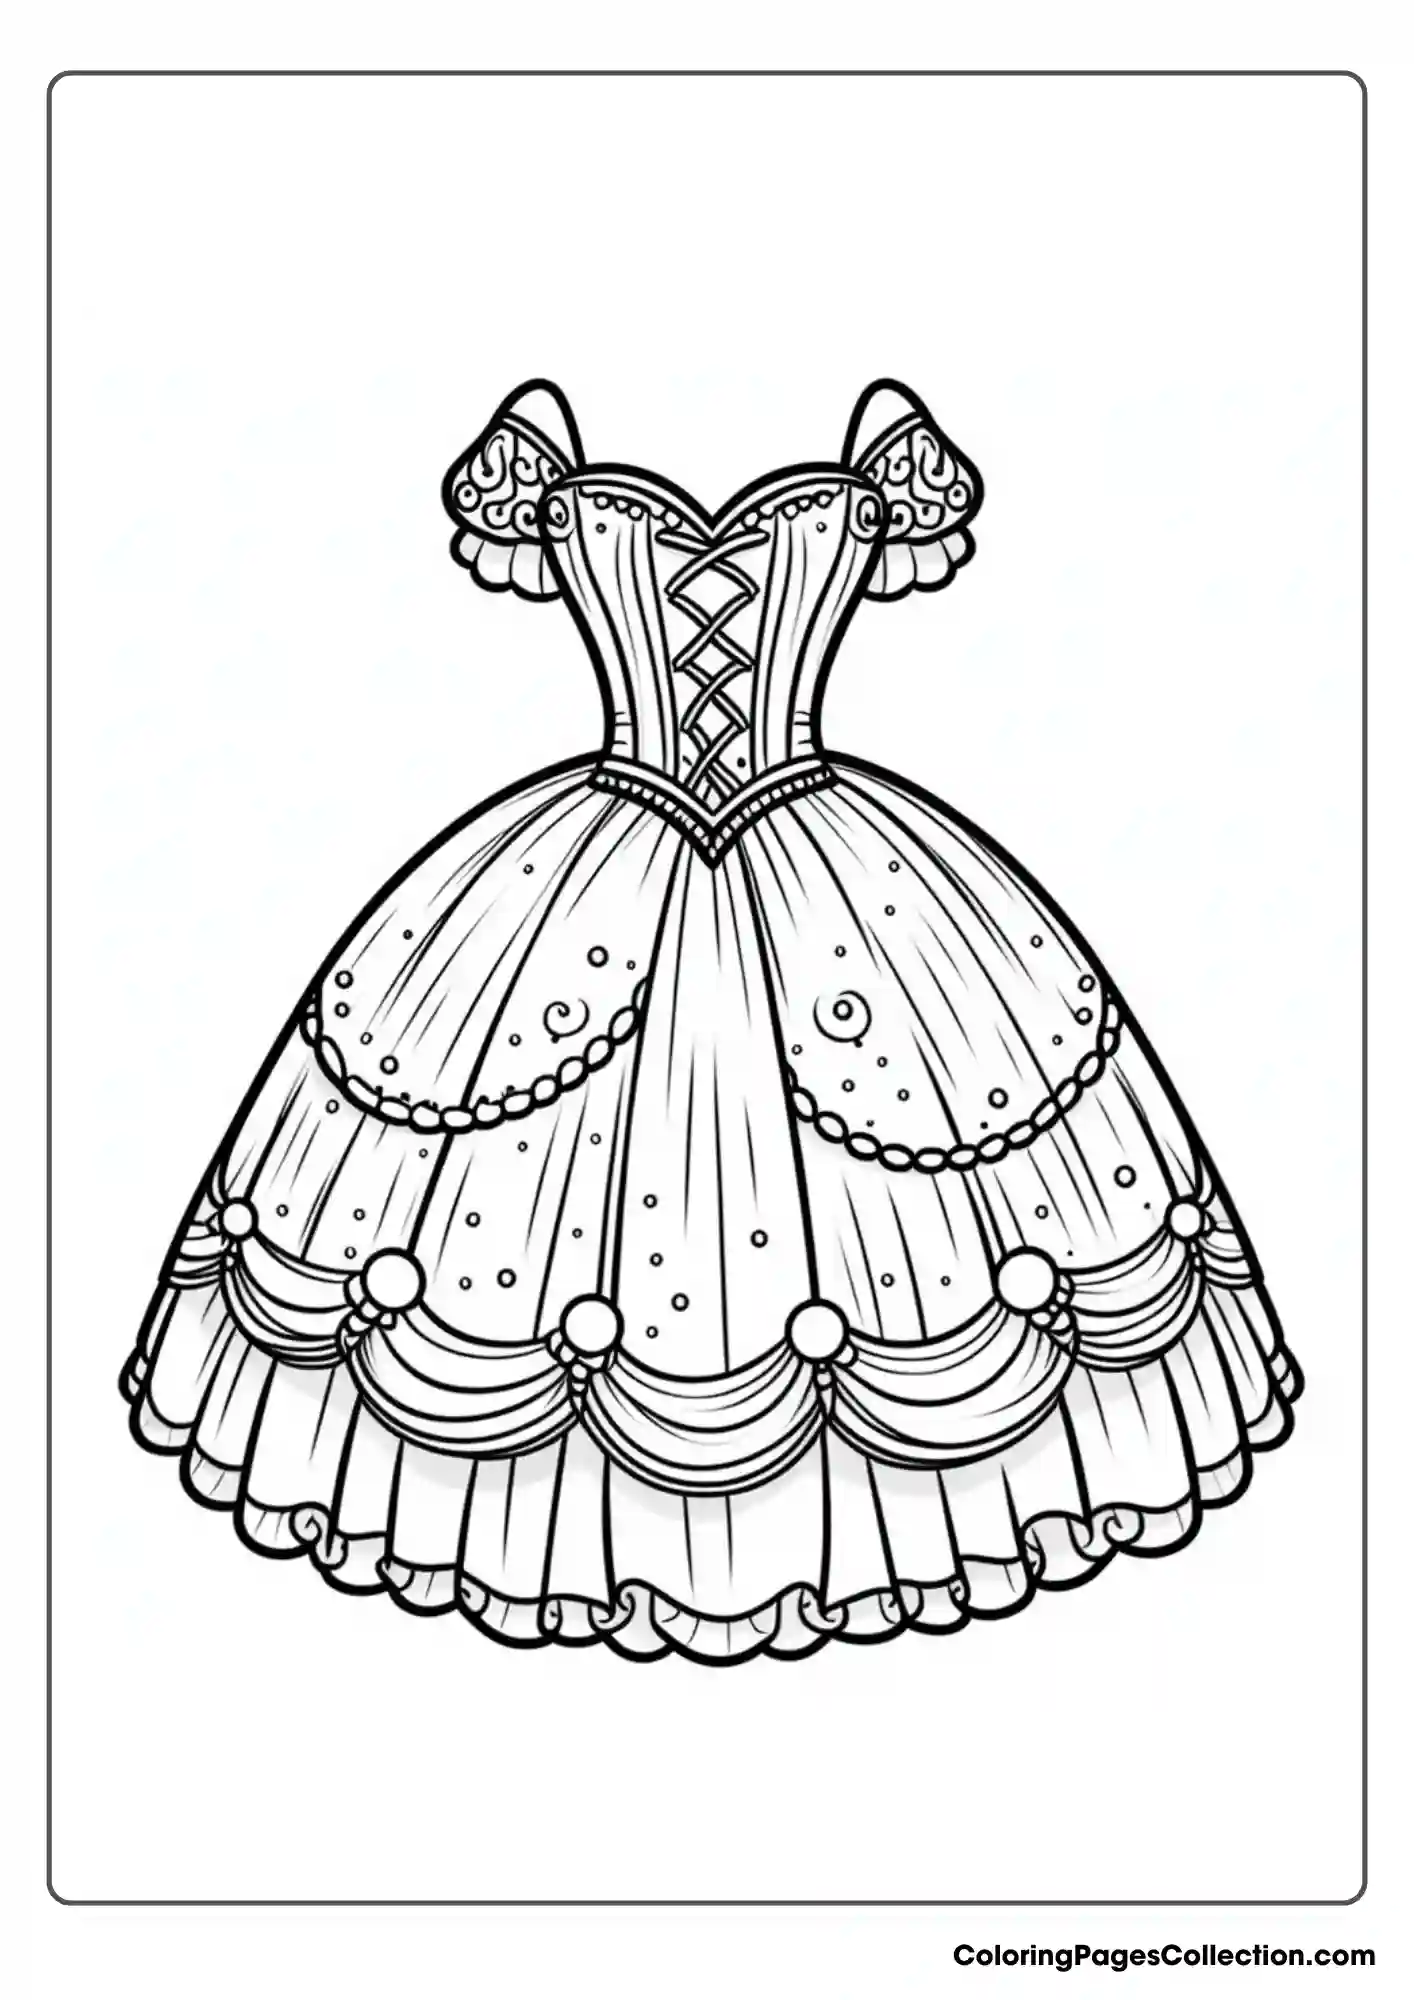 Layered Tulle Skirt Princess Dress